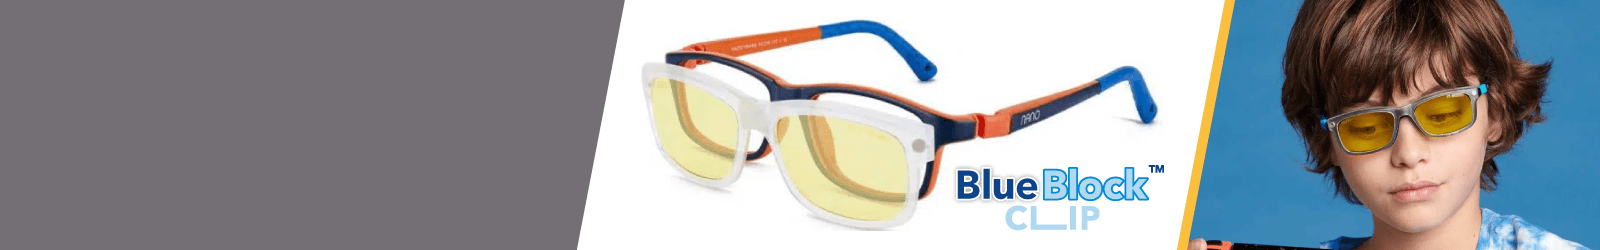 Peach Nano Blue Block Clip Eyewear for Kids